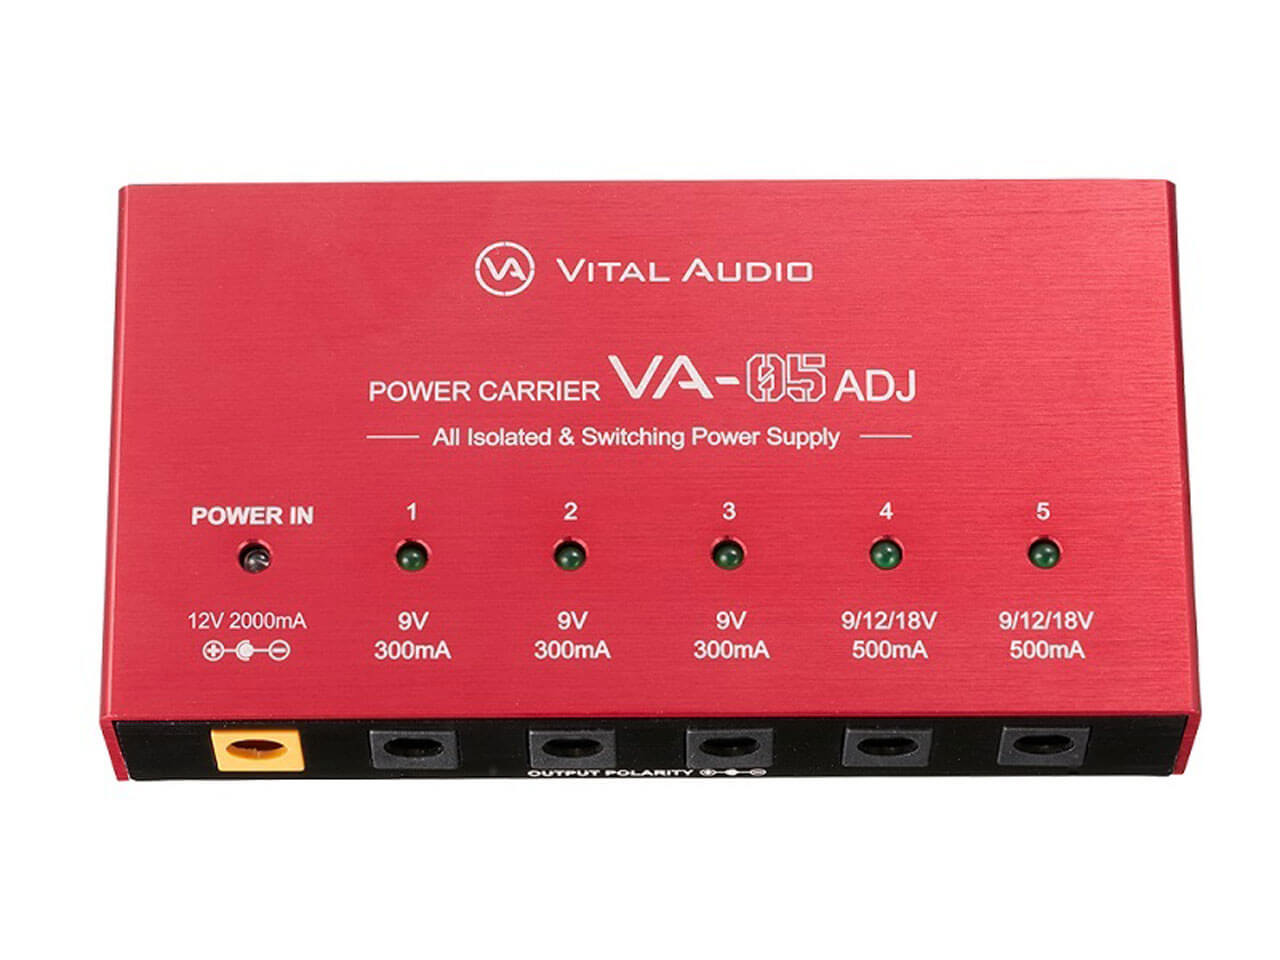 Vital Audio POWER CARRIER VA-05 ADJ<br>(パワーサプライ)(バイタルオーディオ) 駅前店